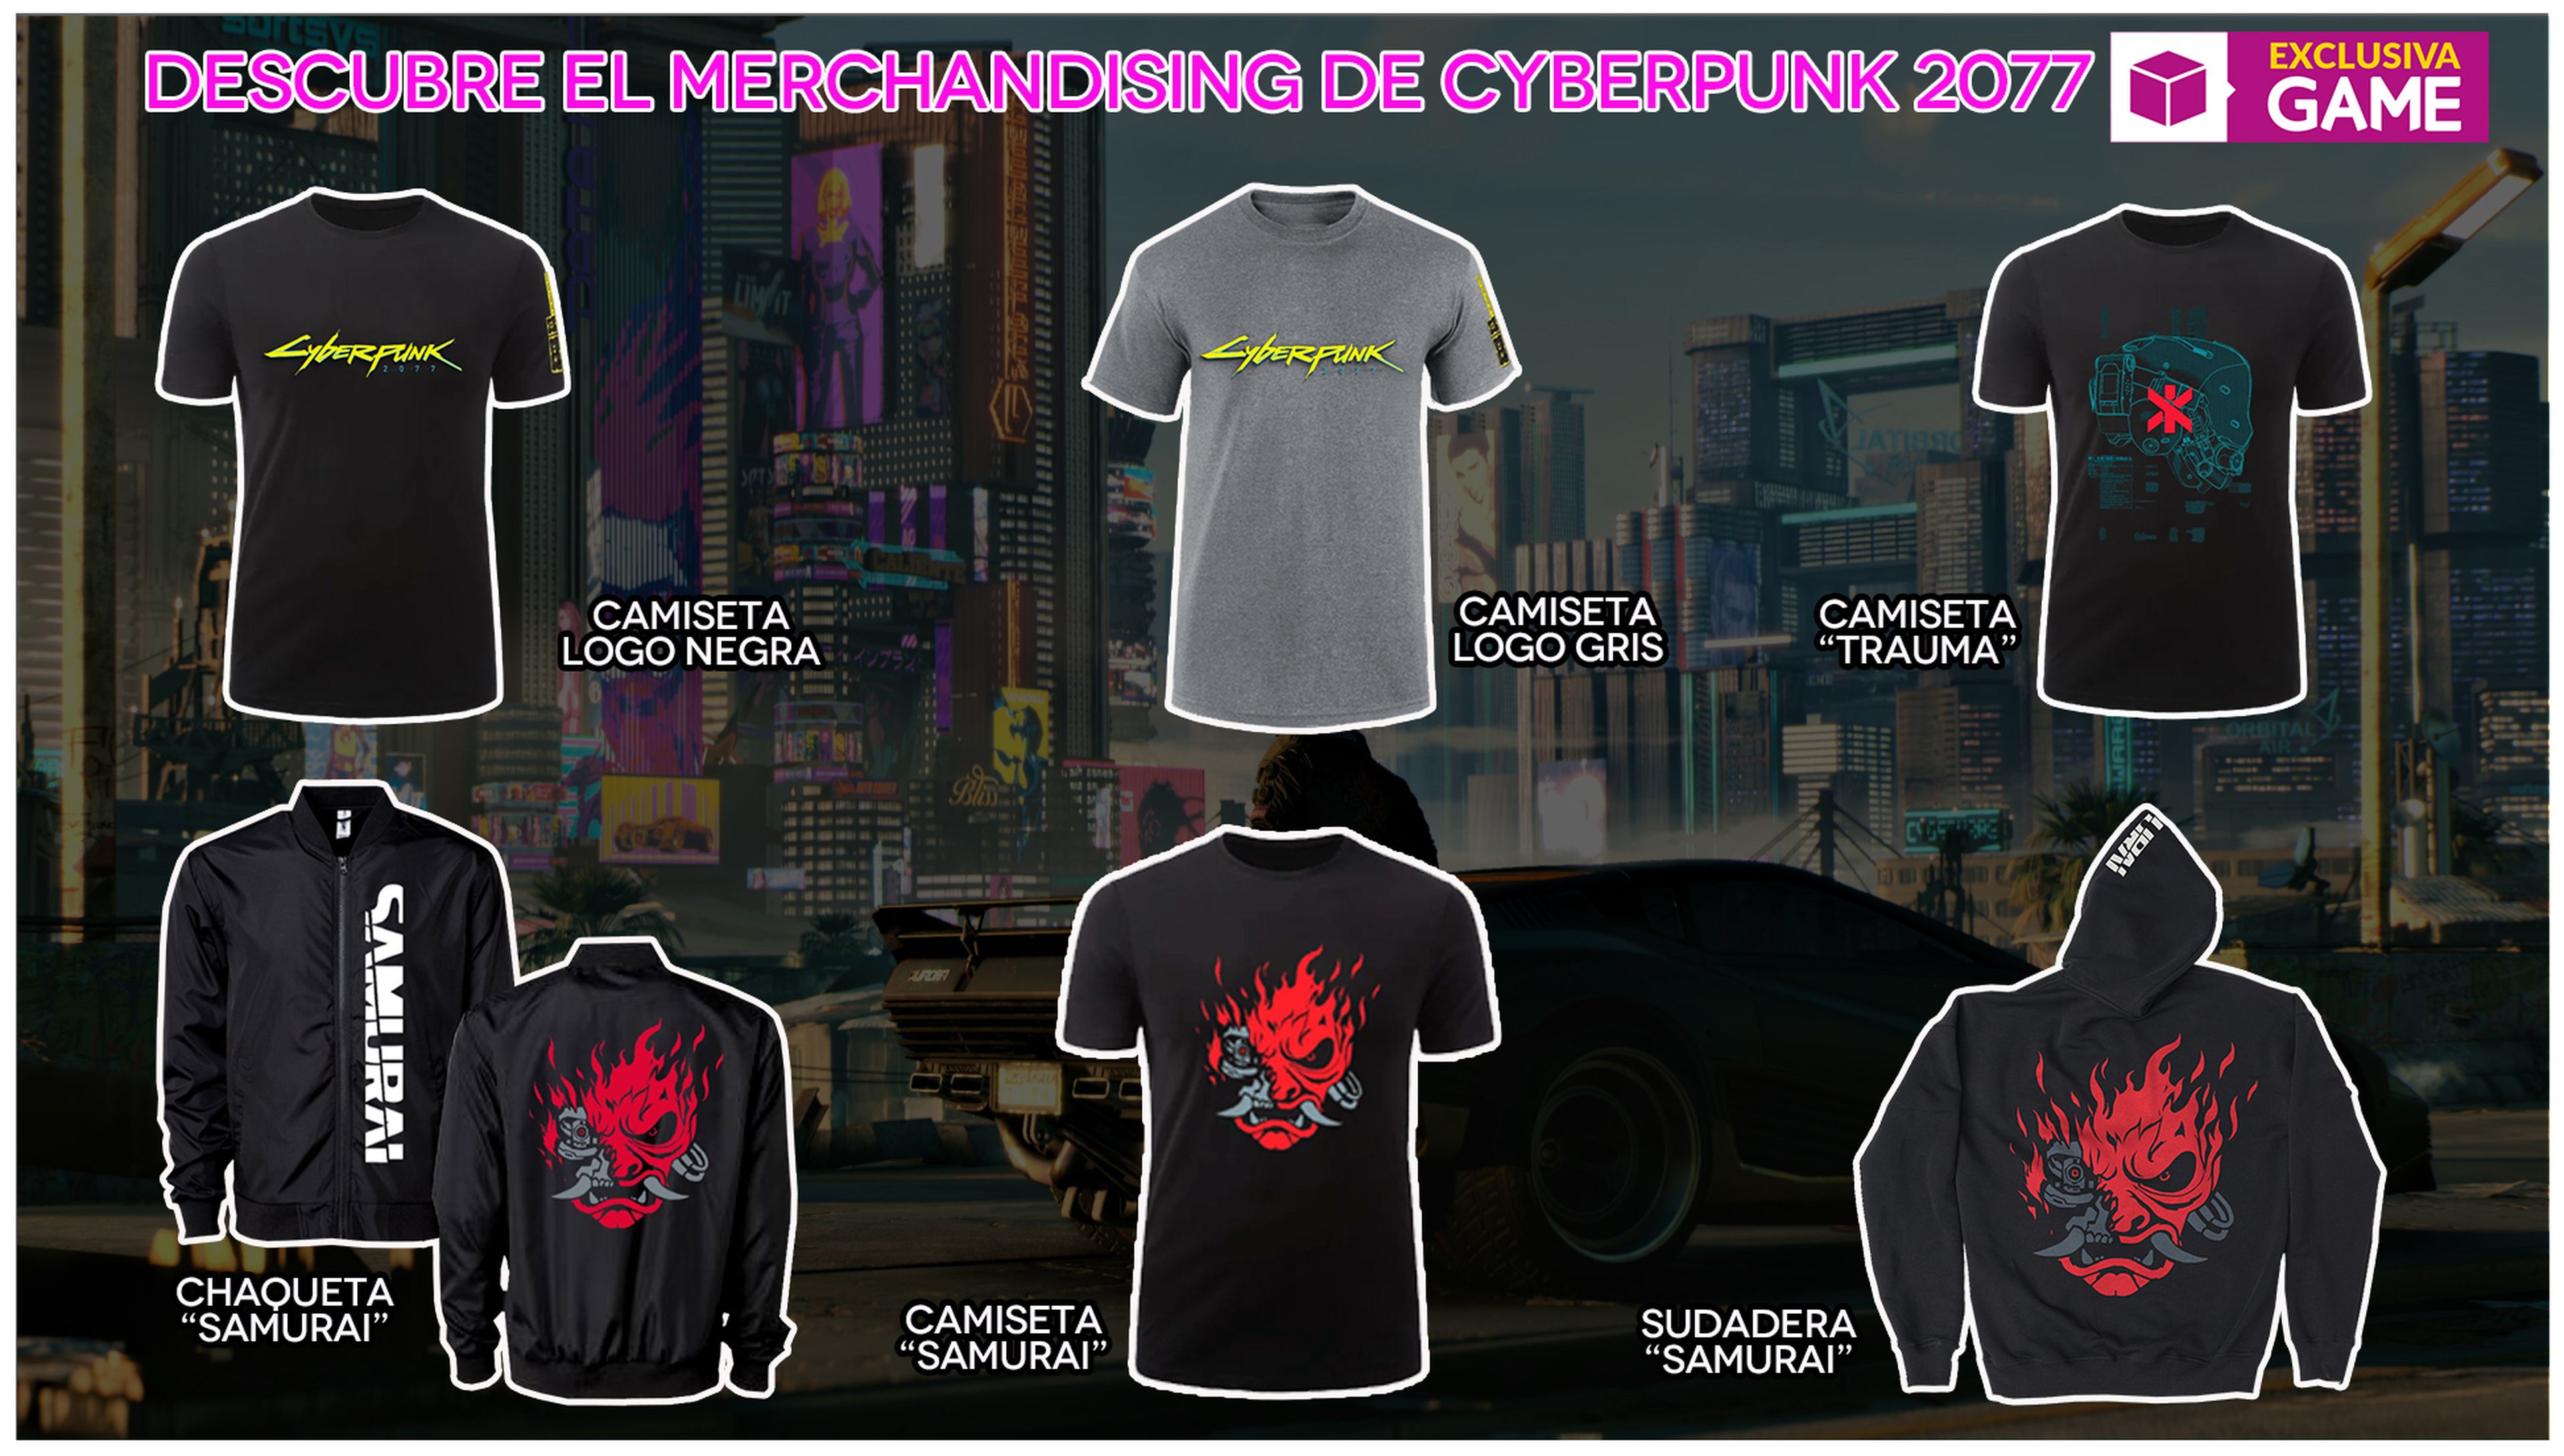 Cyberpunk 2077 Merchandising